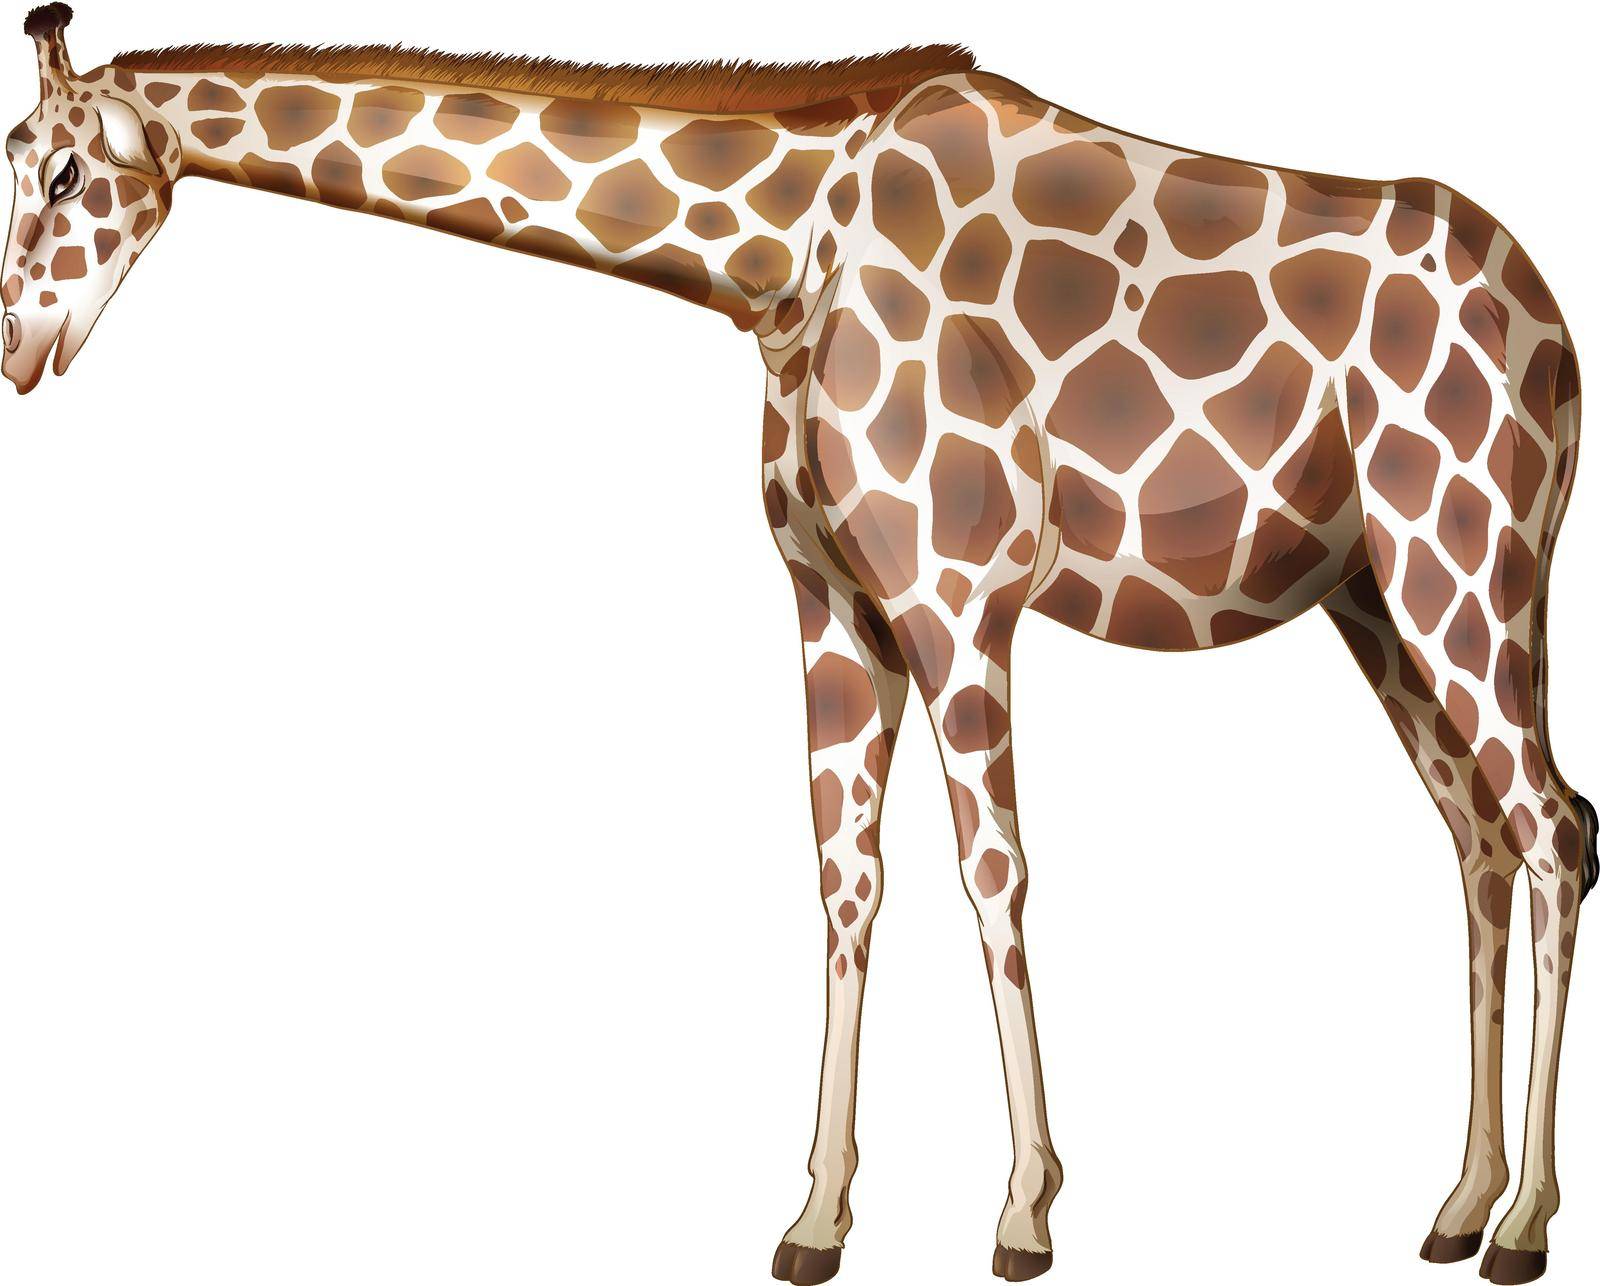 A tall giraffe by iimages